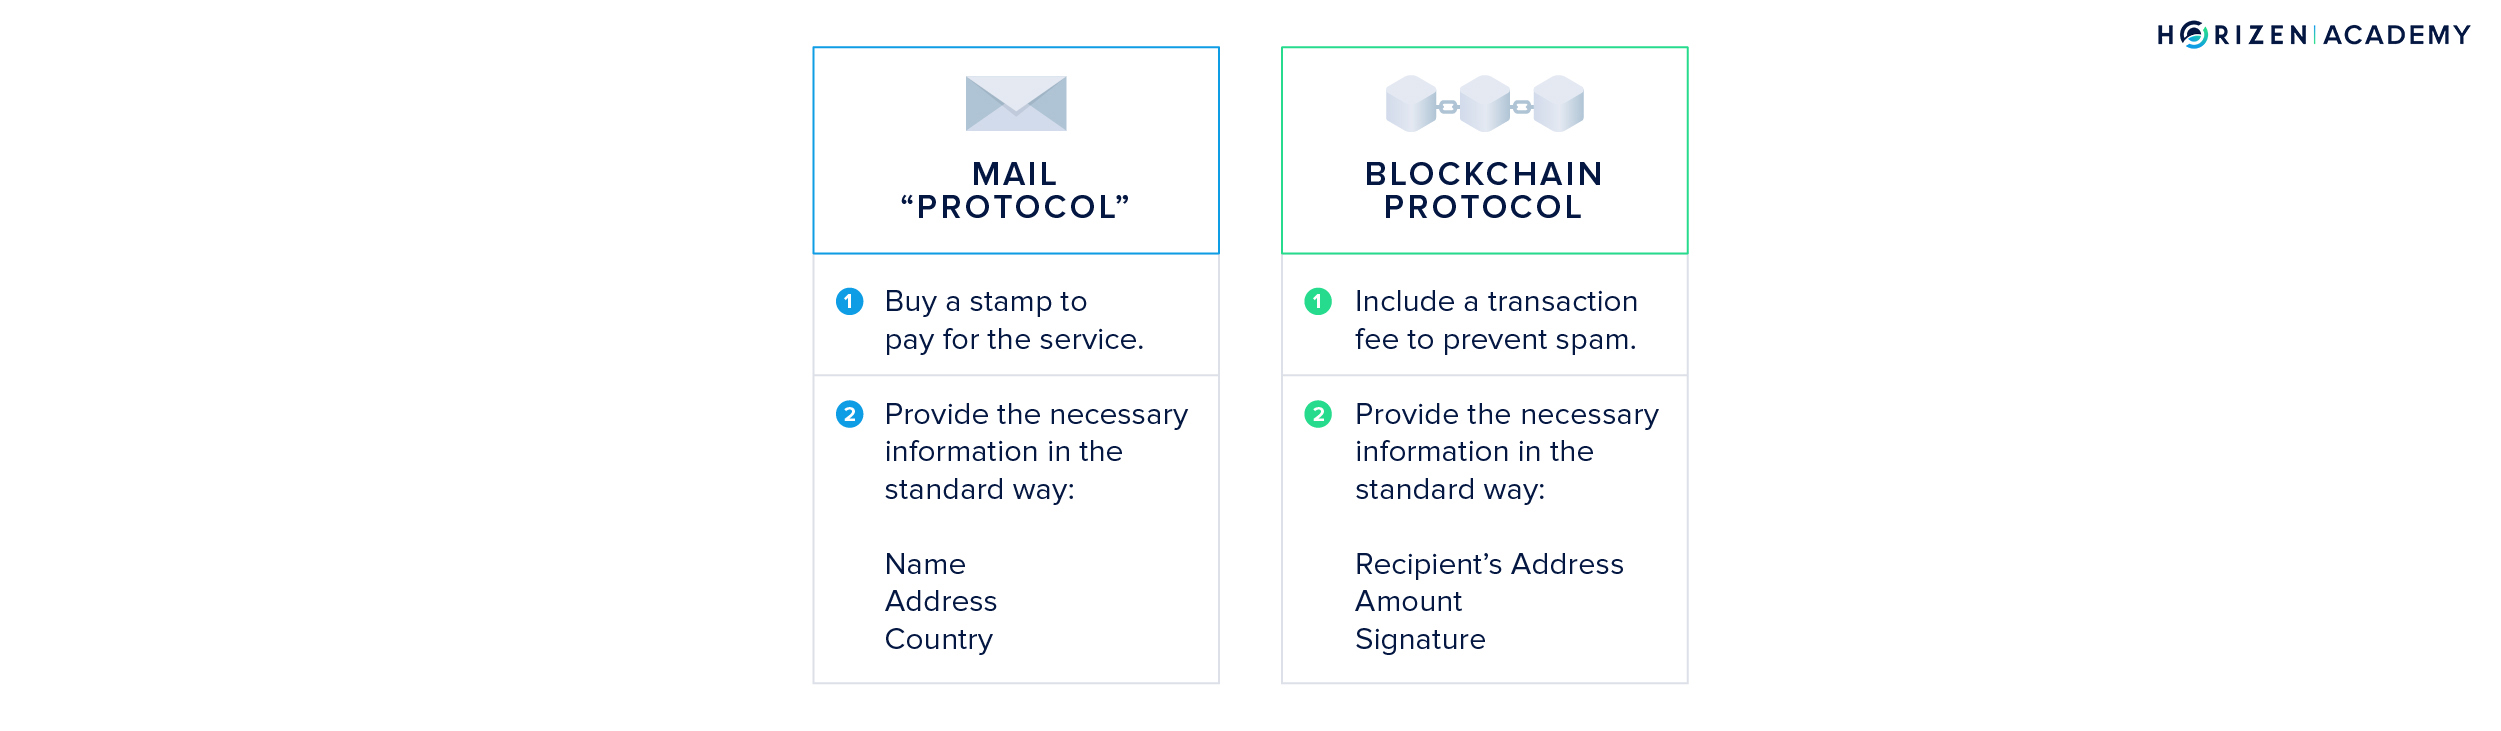 Mail protocol